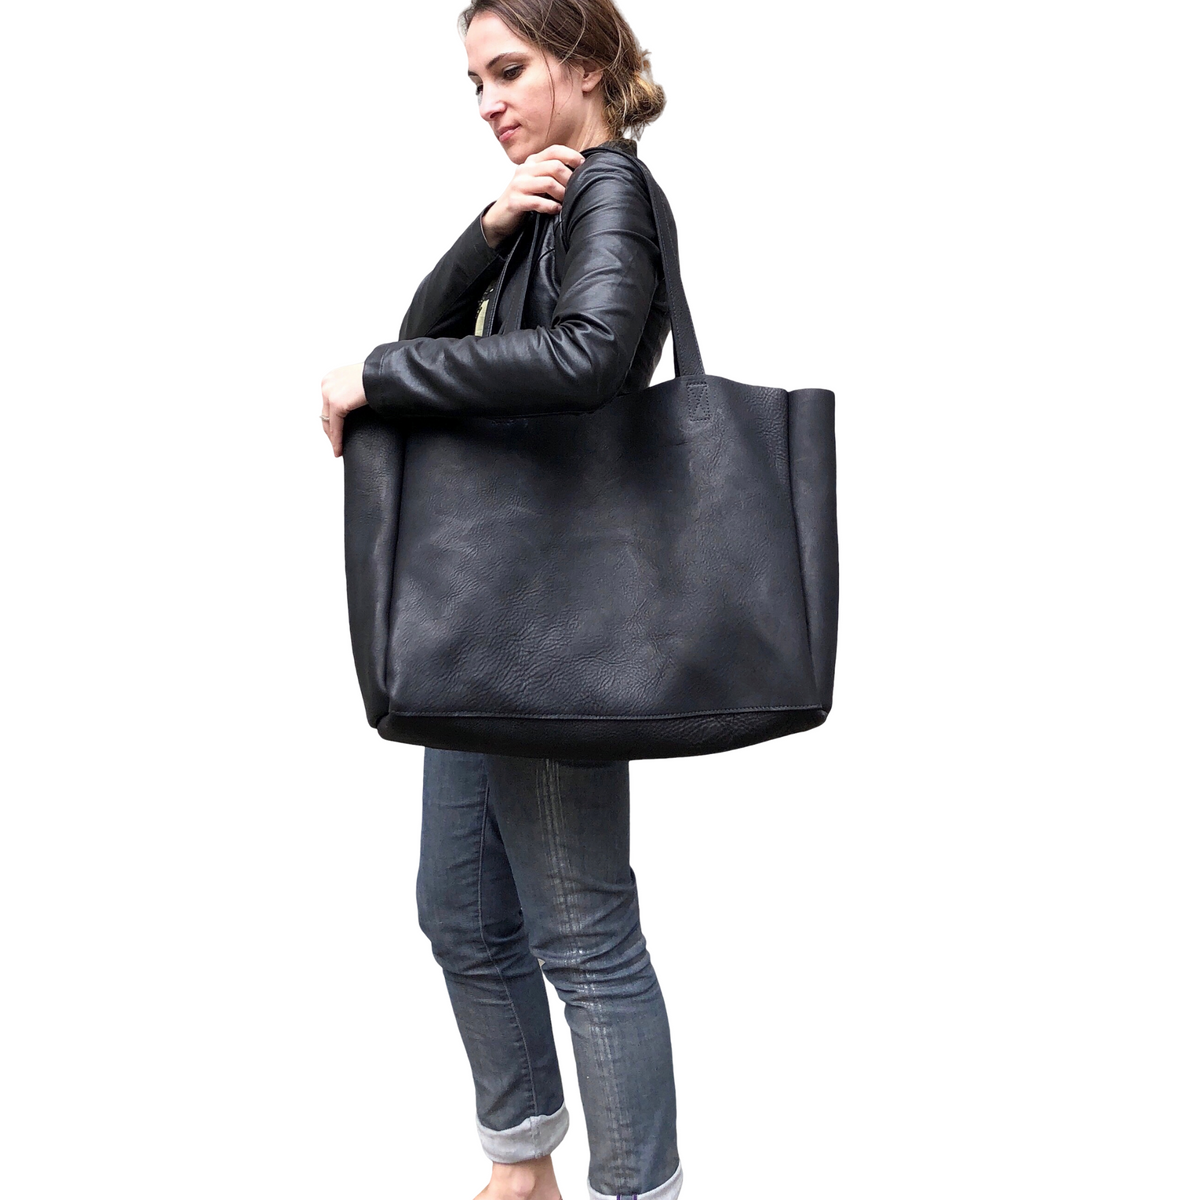 Metallic silver oversized leather bag, Large shopper carryall